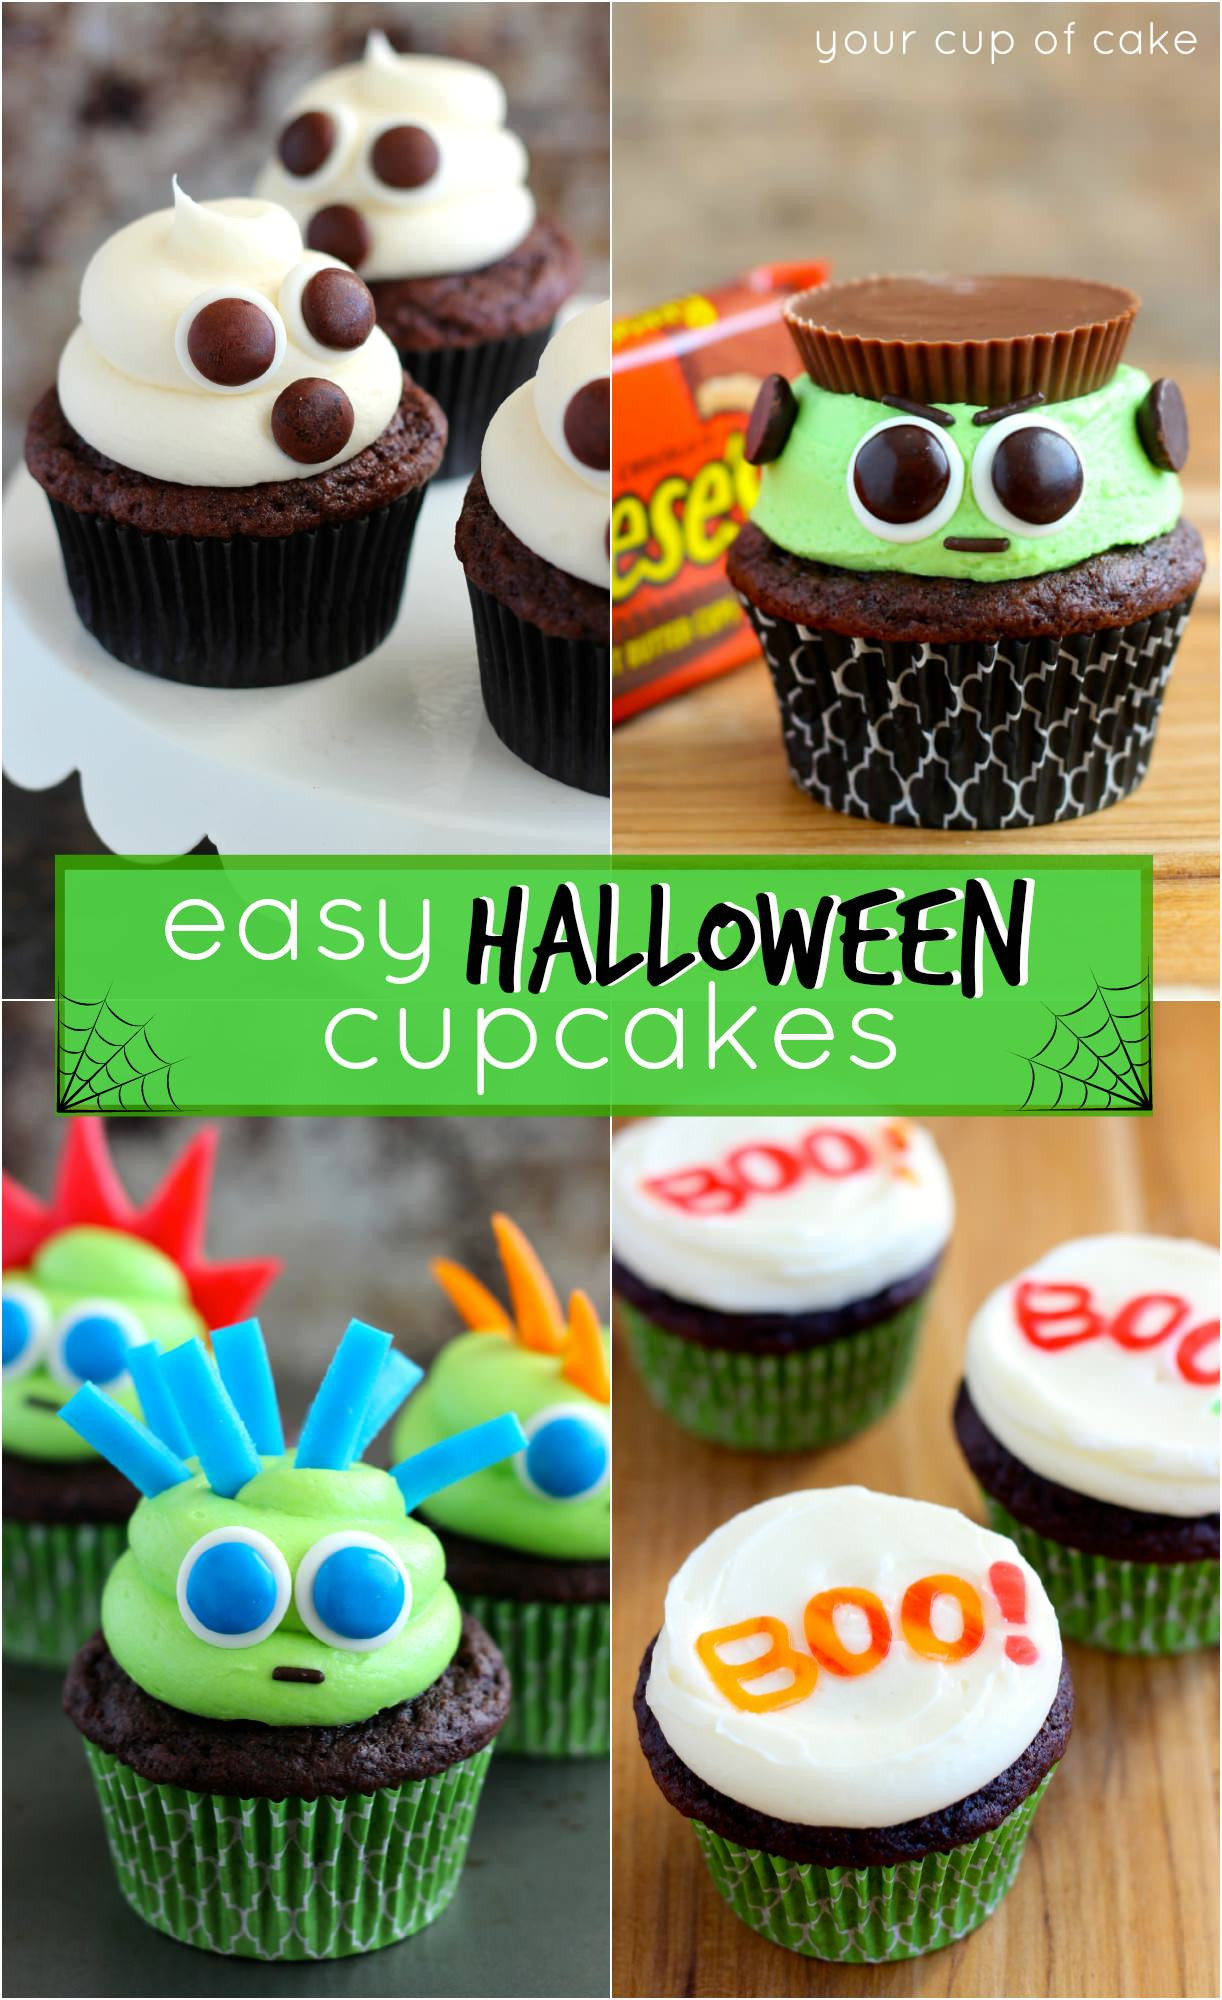 Cute Halloween Cupcakes
 Easy Halloween Cupcake Ideas Your Cup of Cake